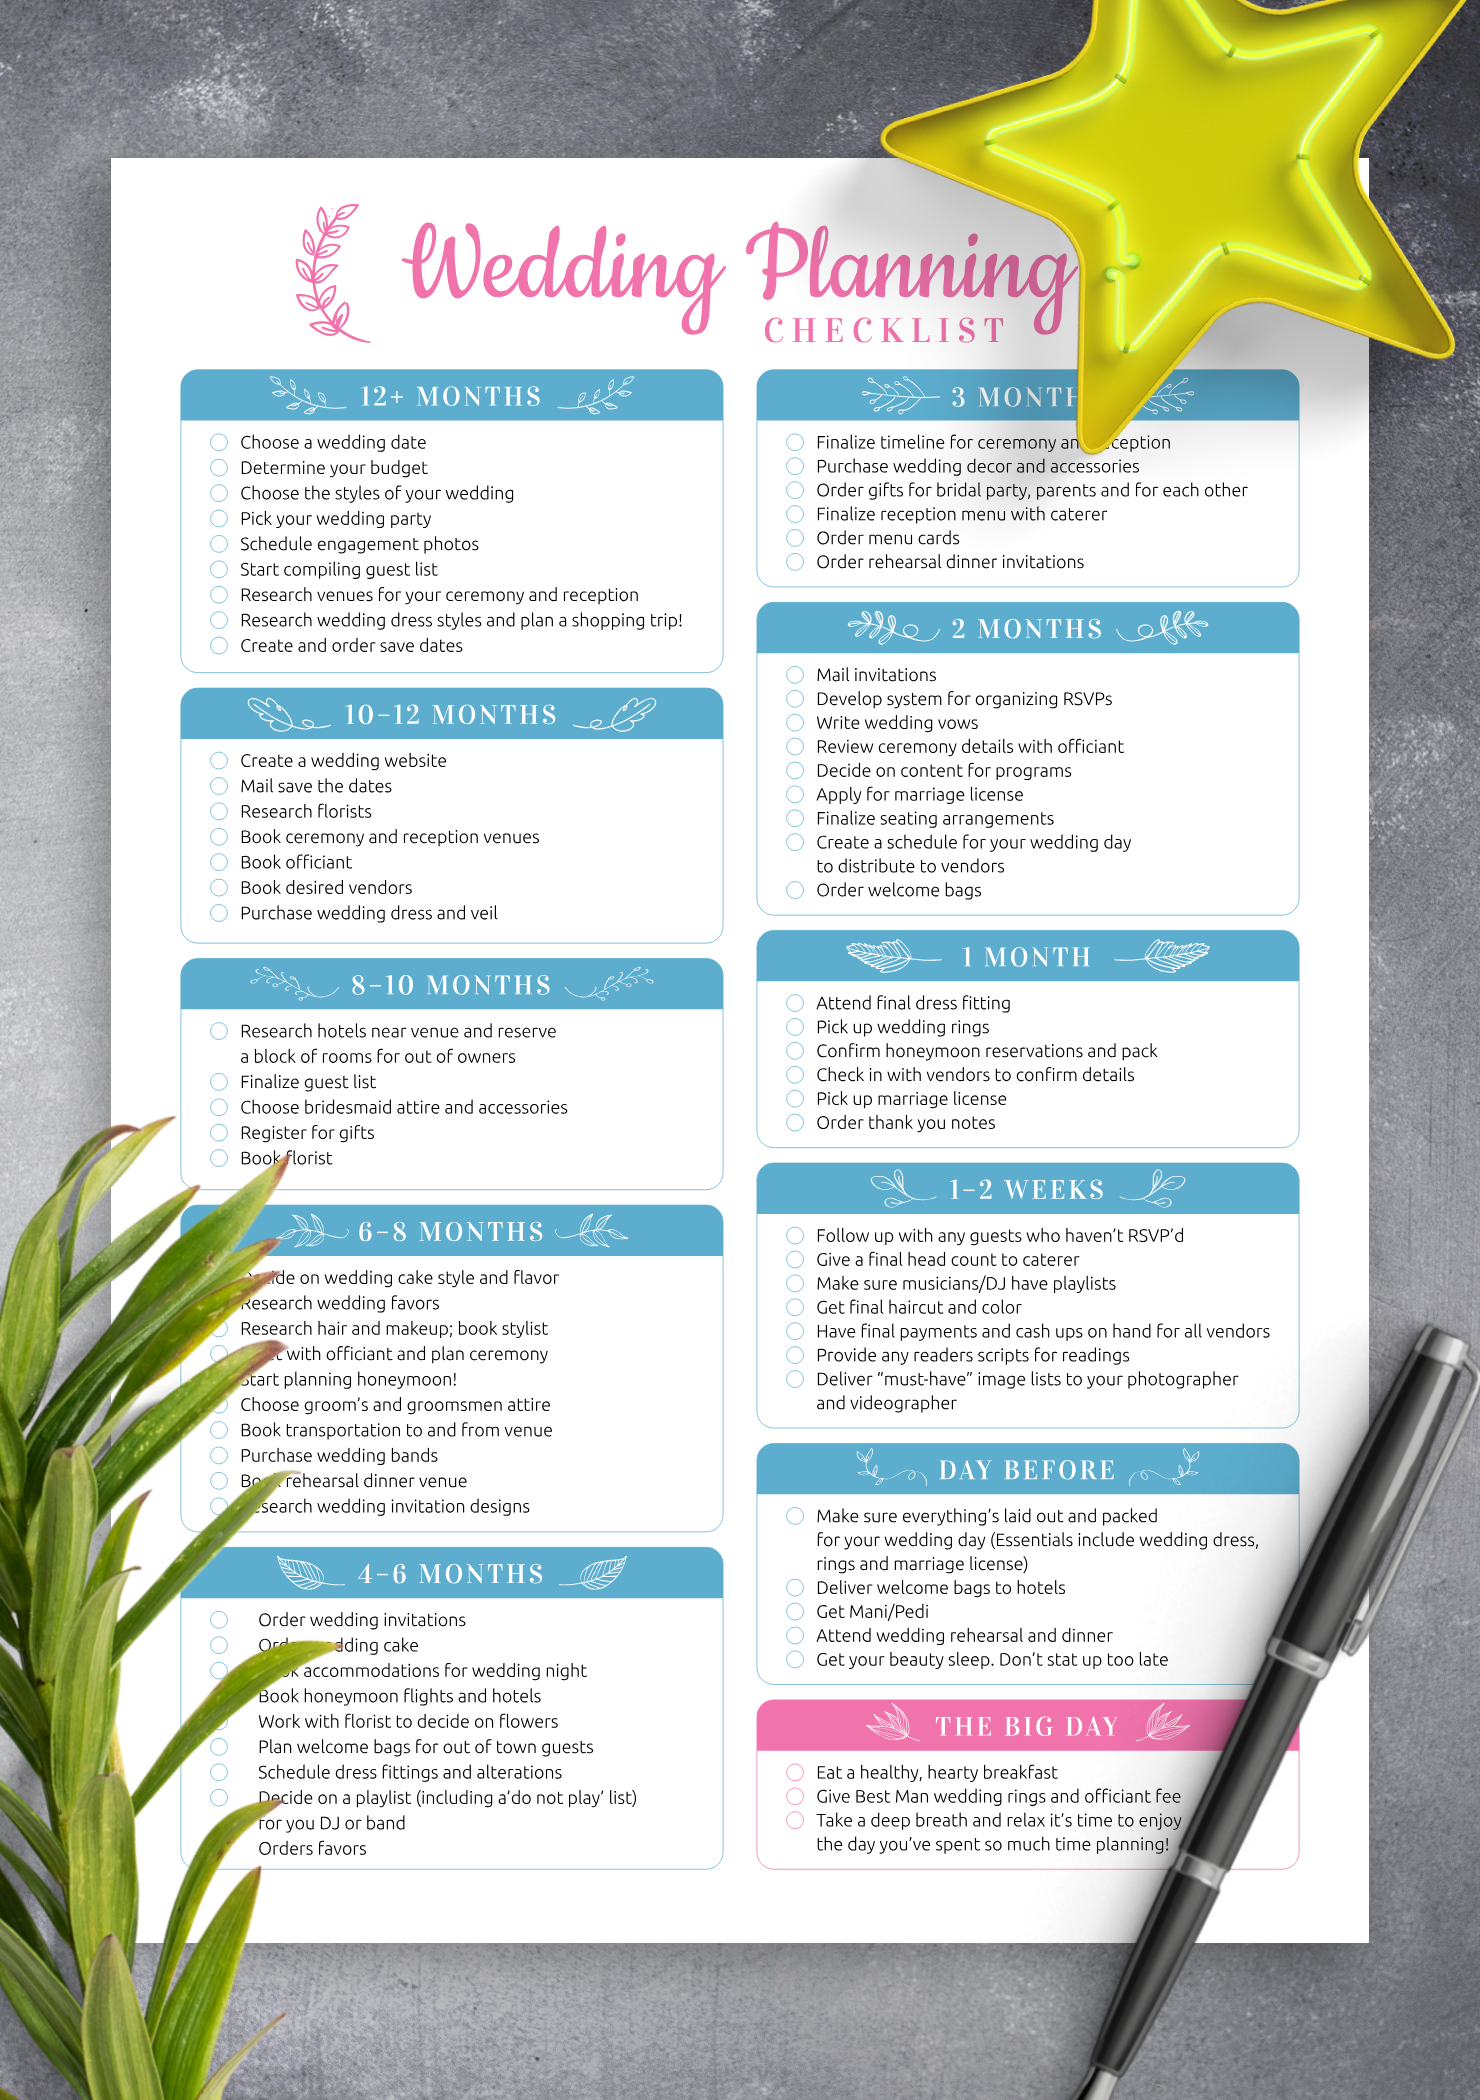 Download Printable Wedding Planning Checklist PDF Intended For Wedding Timeline Checklist Template Regarding Wedding Timeline Checklist Template